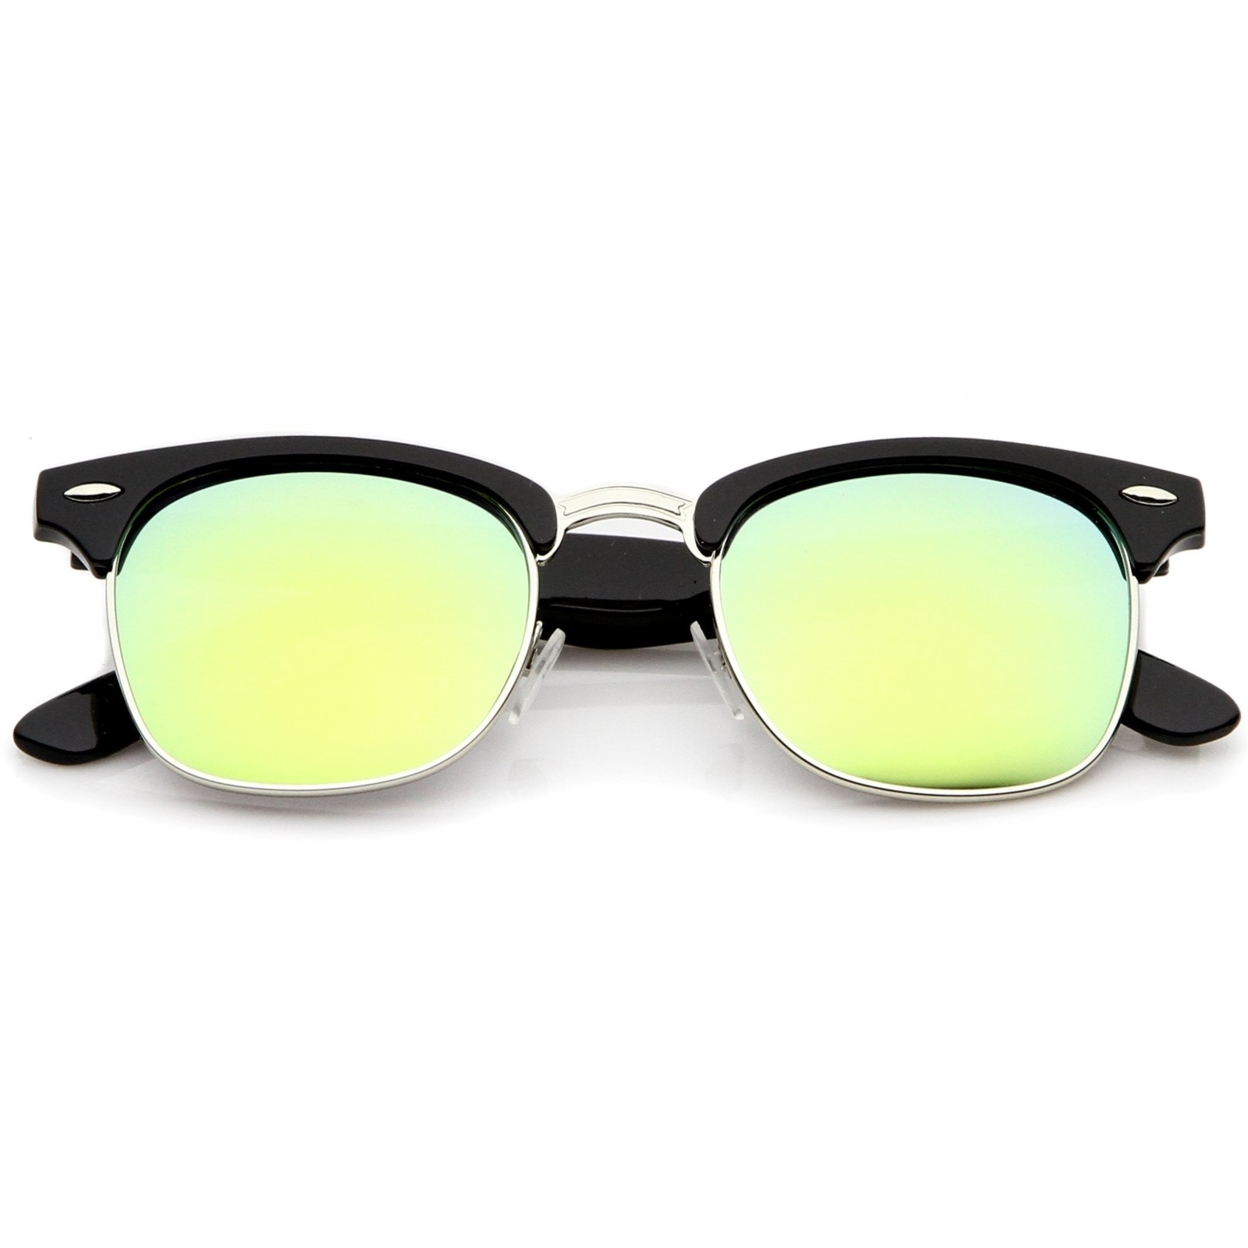 Premium Half Frame Colored Mirror Lens Horn Rimmed Sunglasses 50mm - Black-Gold / Yellow Mirror